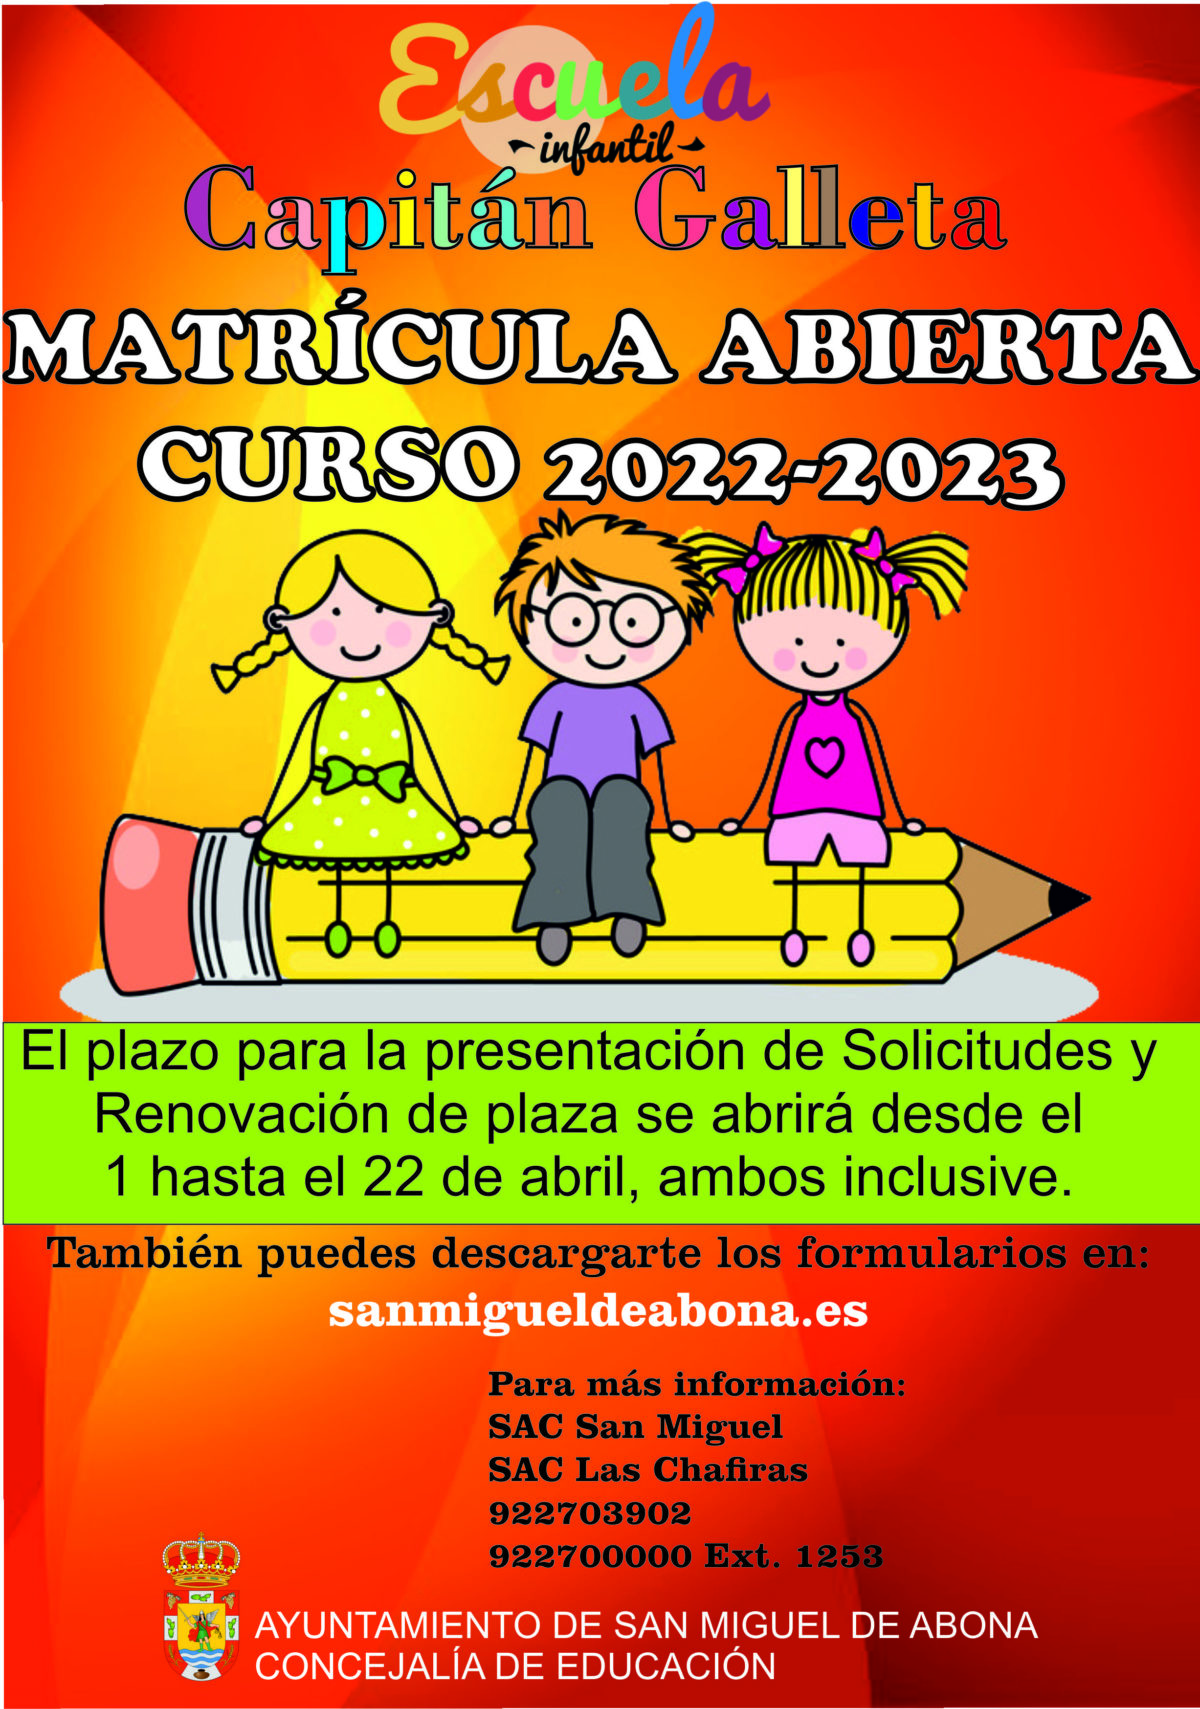 Se abre el plazo de matrícula para el curso 2022-2023 de la Escuela Infantil Municipal Capitán Galleta